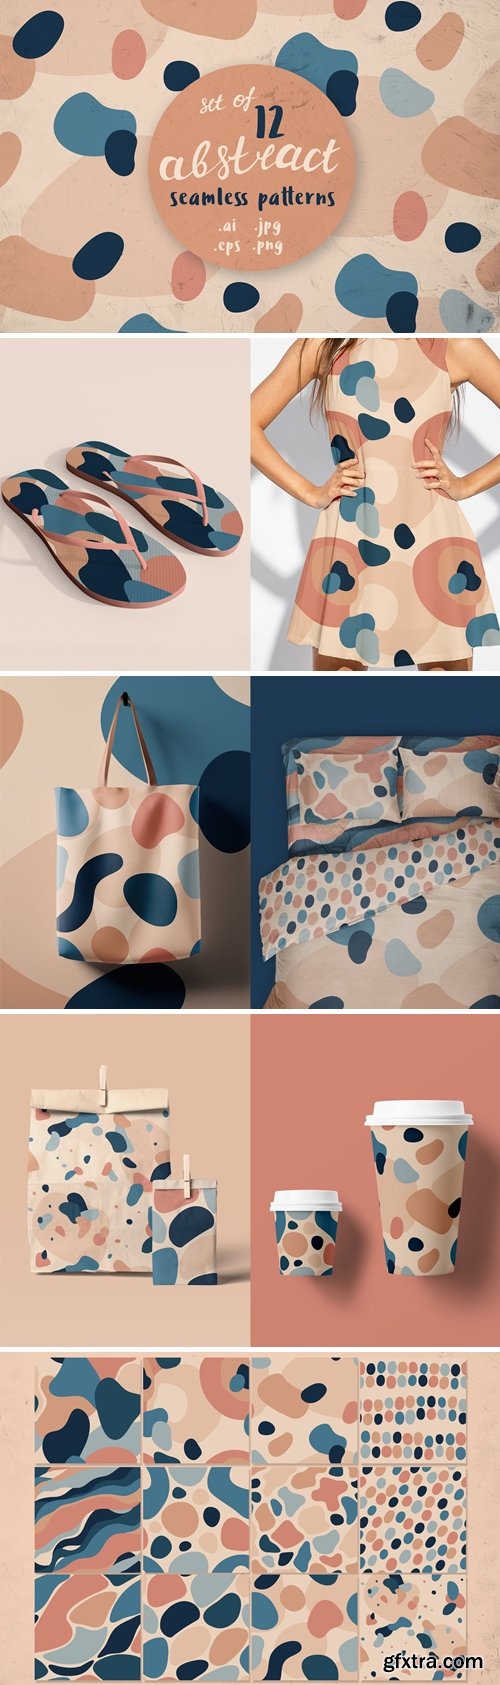 CreativeMarket - 12 abstract seamless patterns 5005876